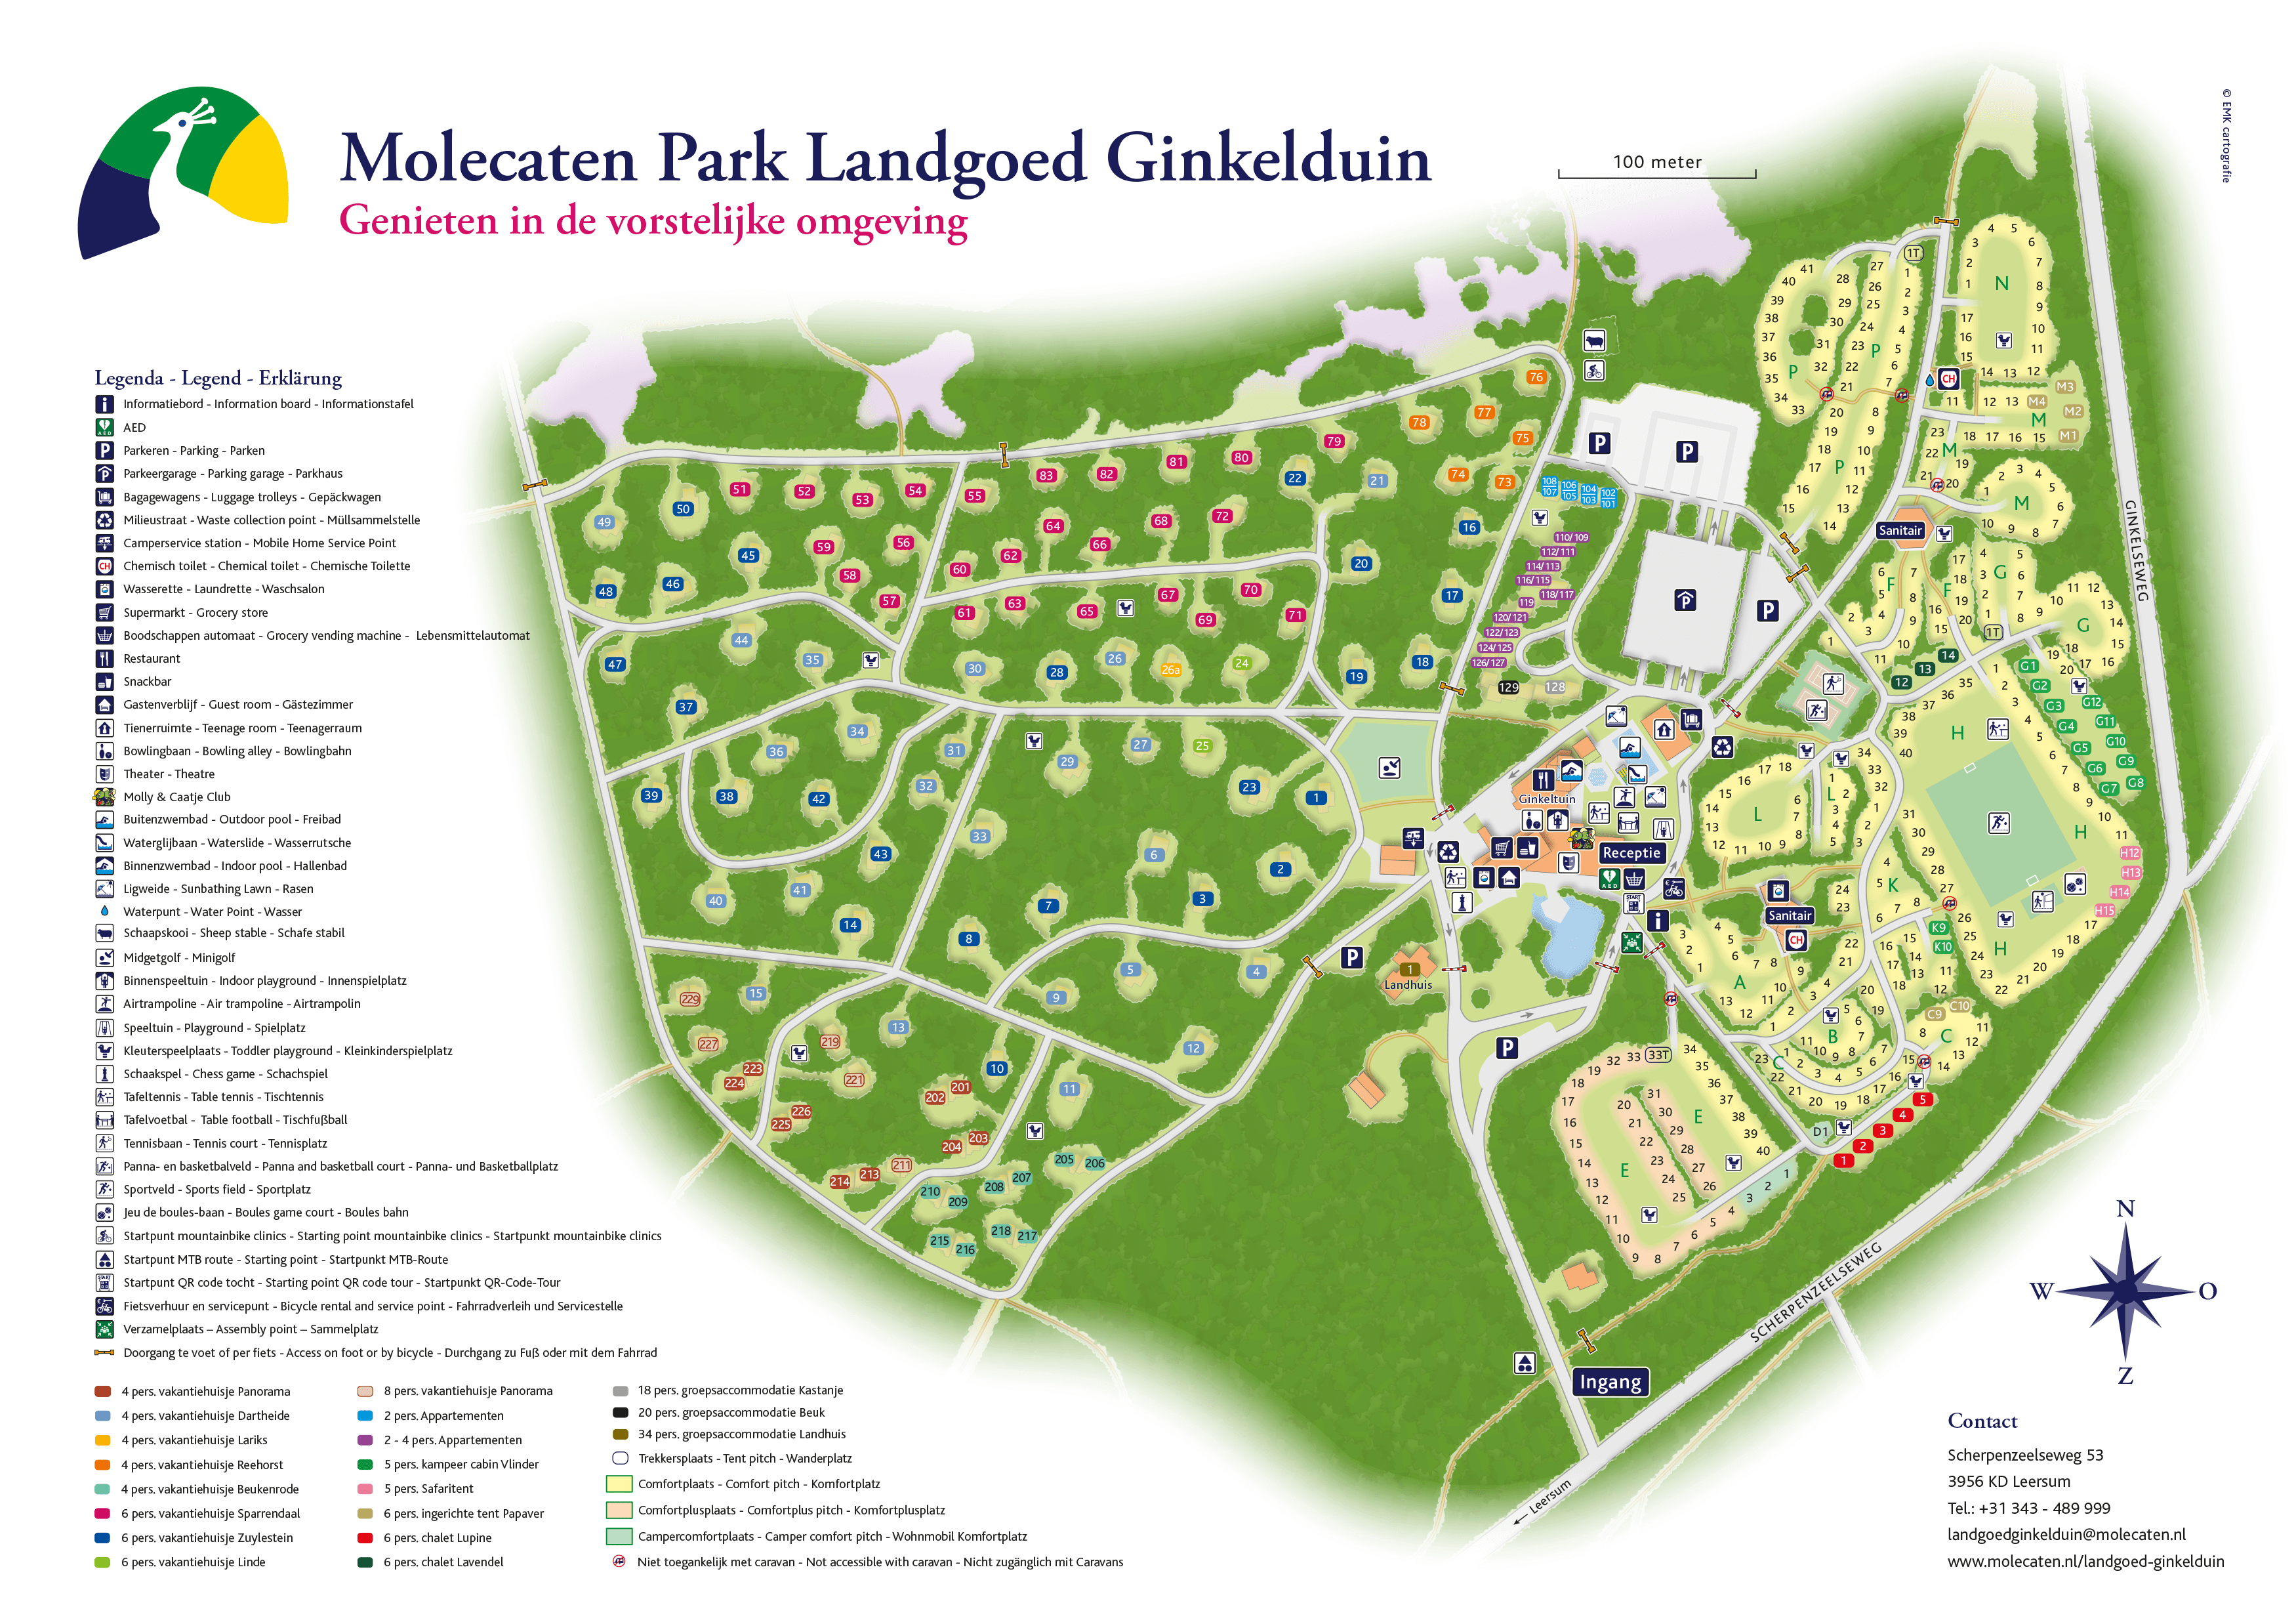 Molecaten Park Landgoed Ginkelduin accommodation.parkmap.alttext